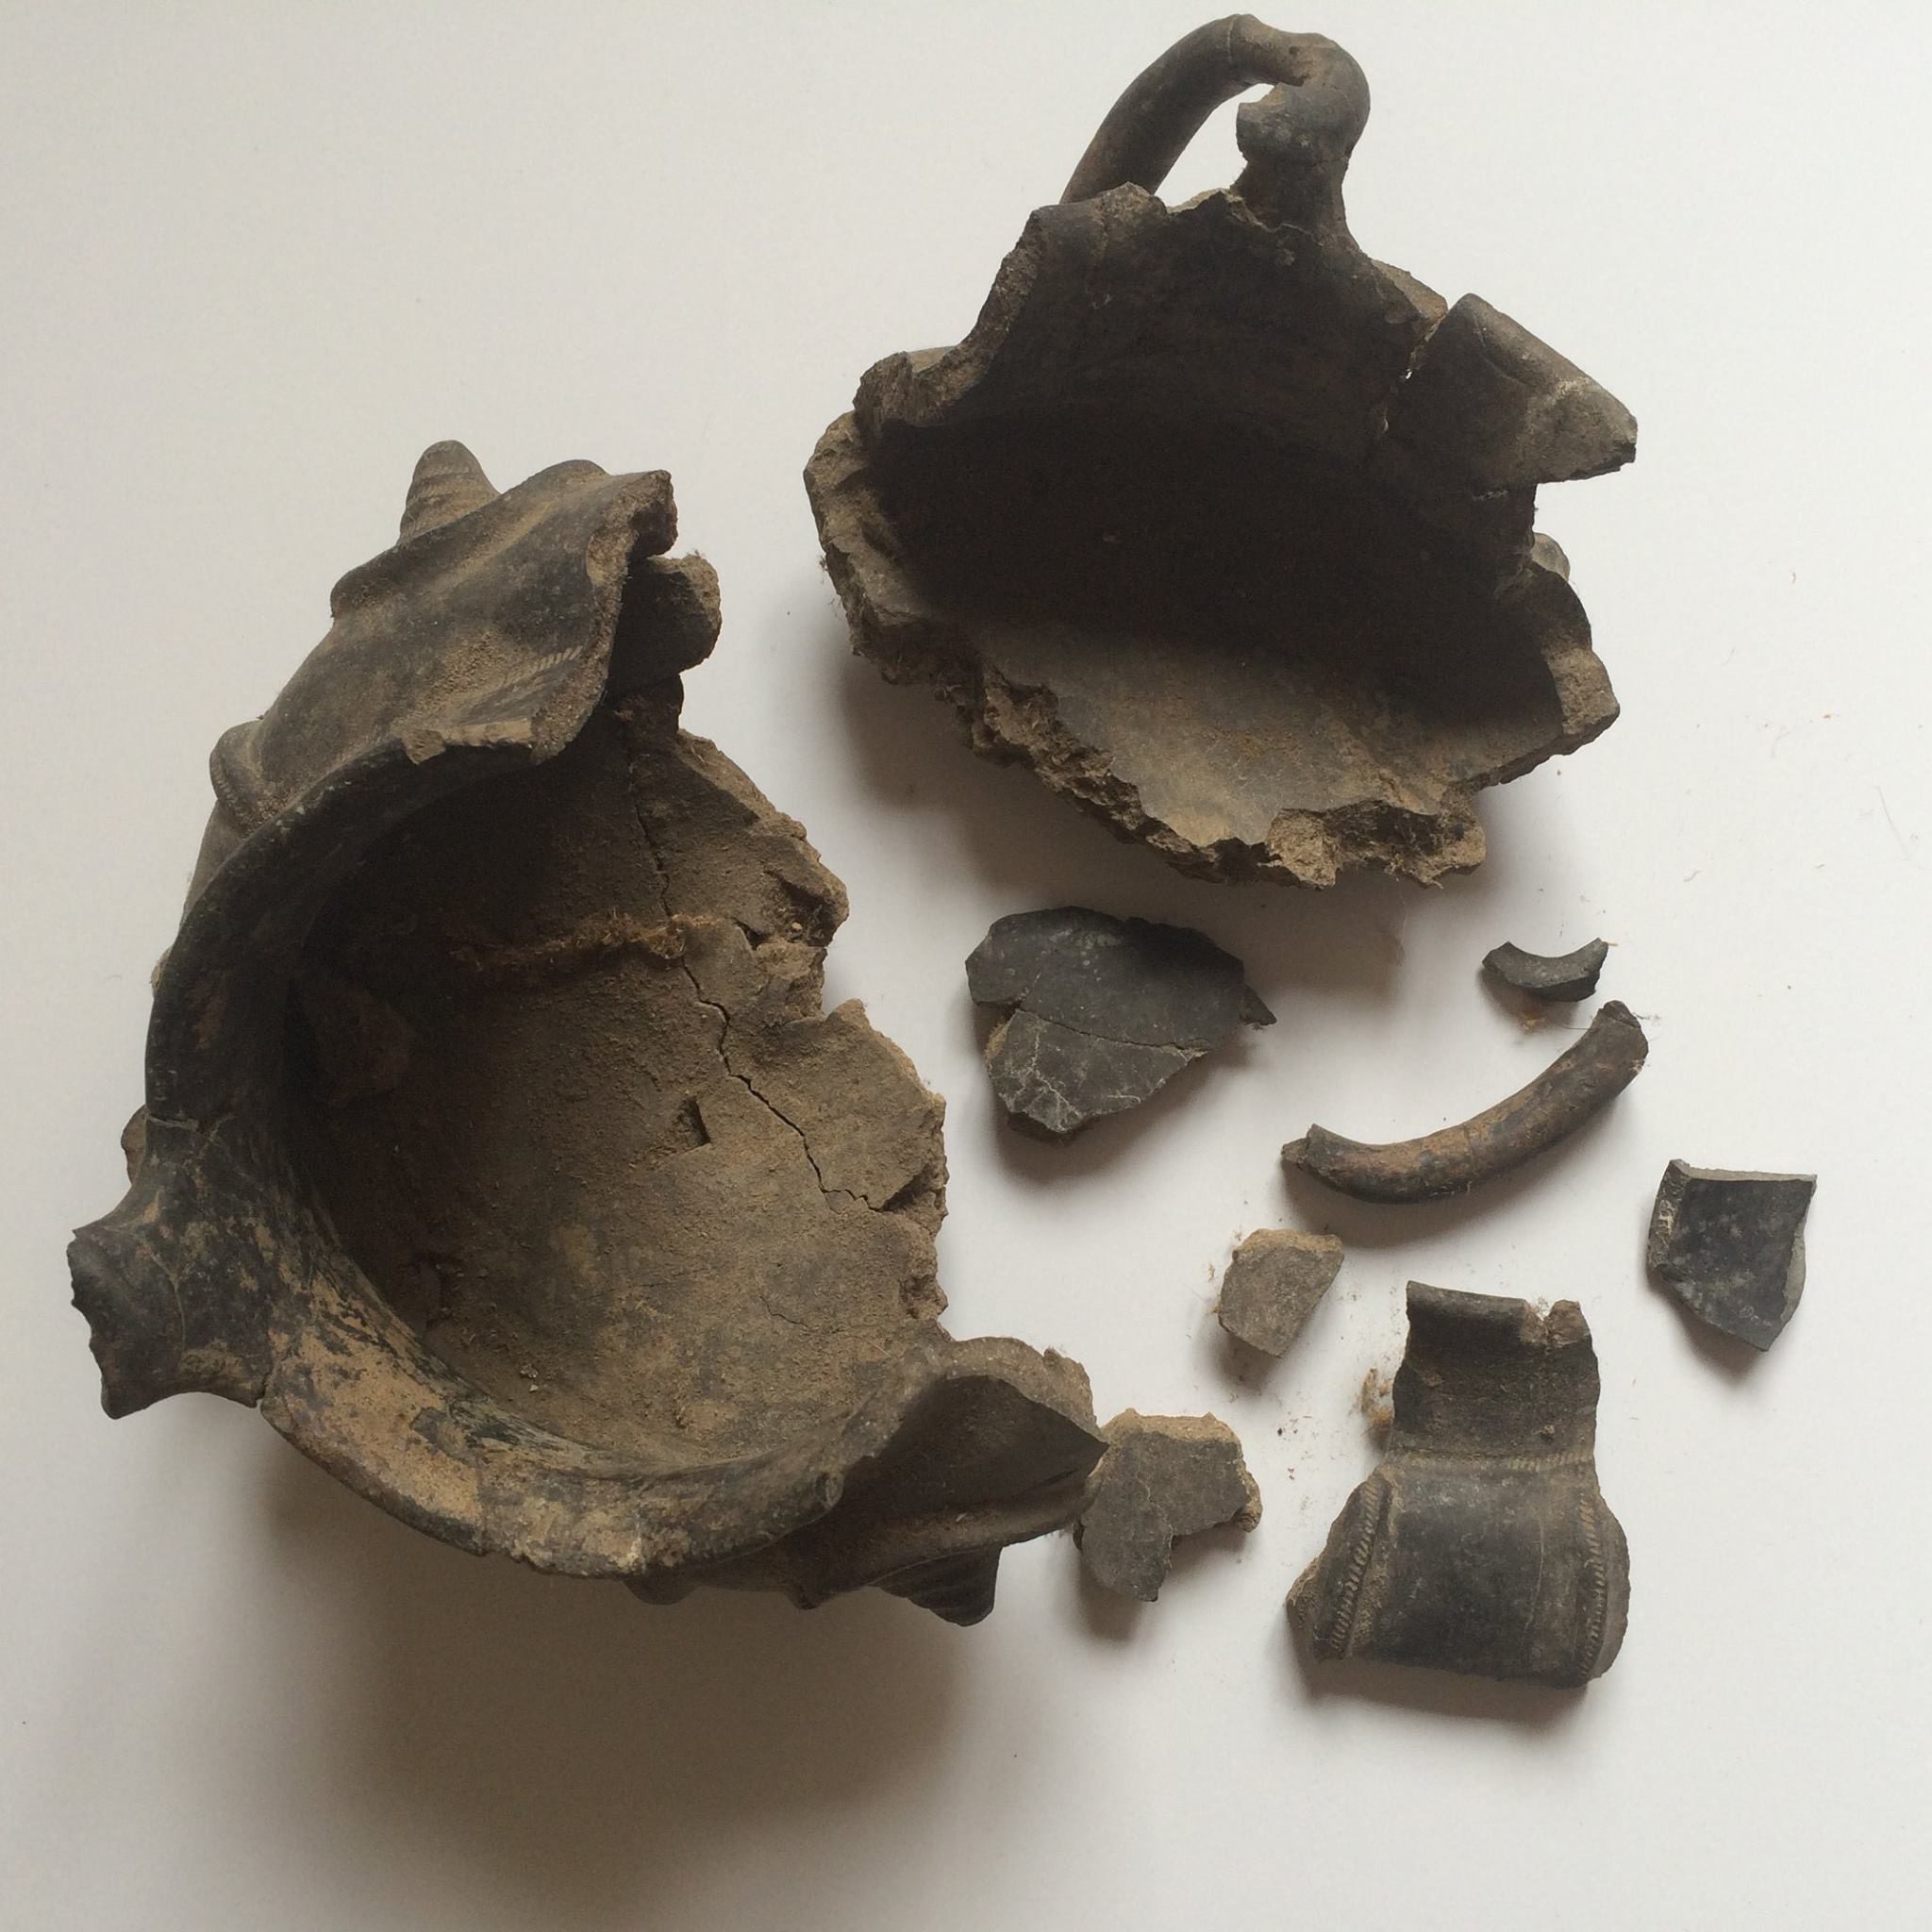 Shattered Etruscan pottery before restoration